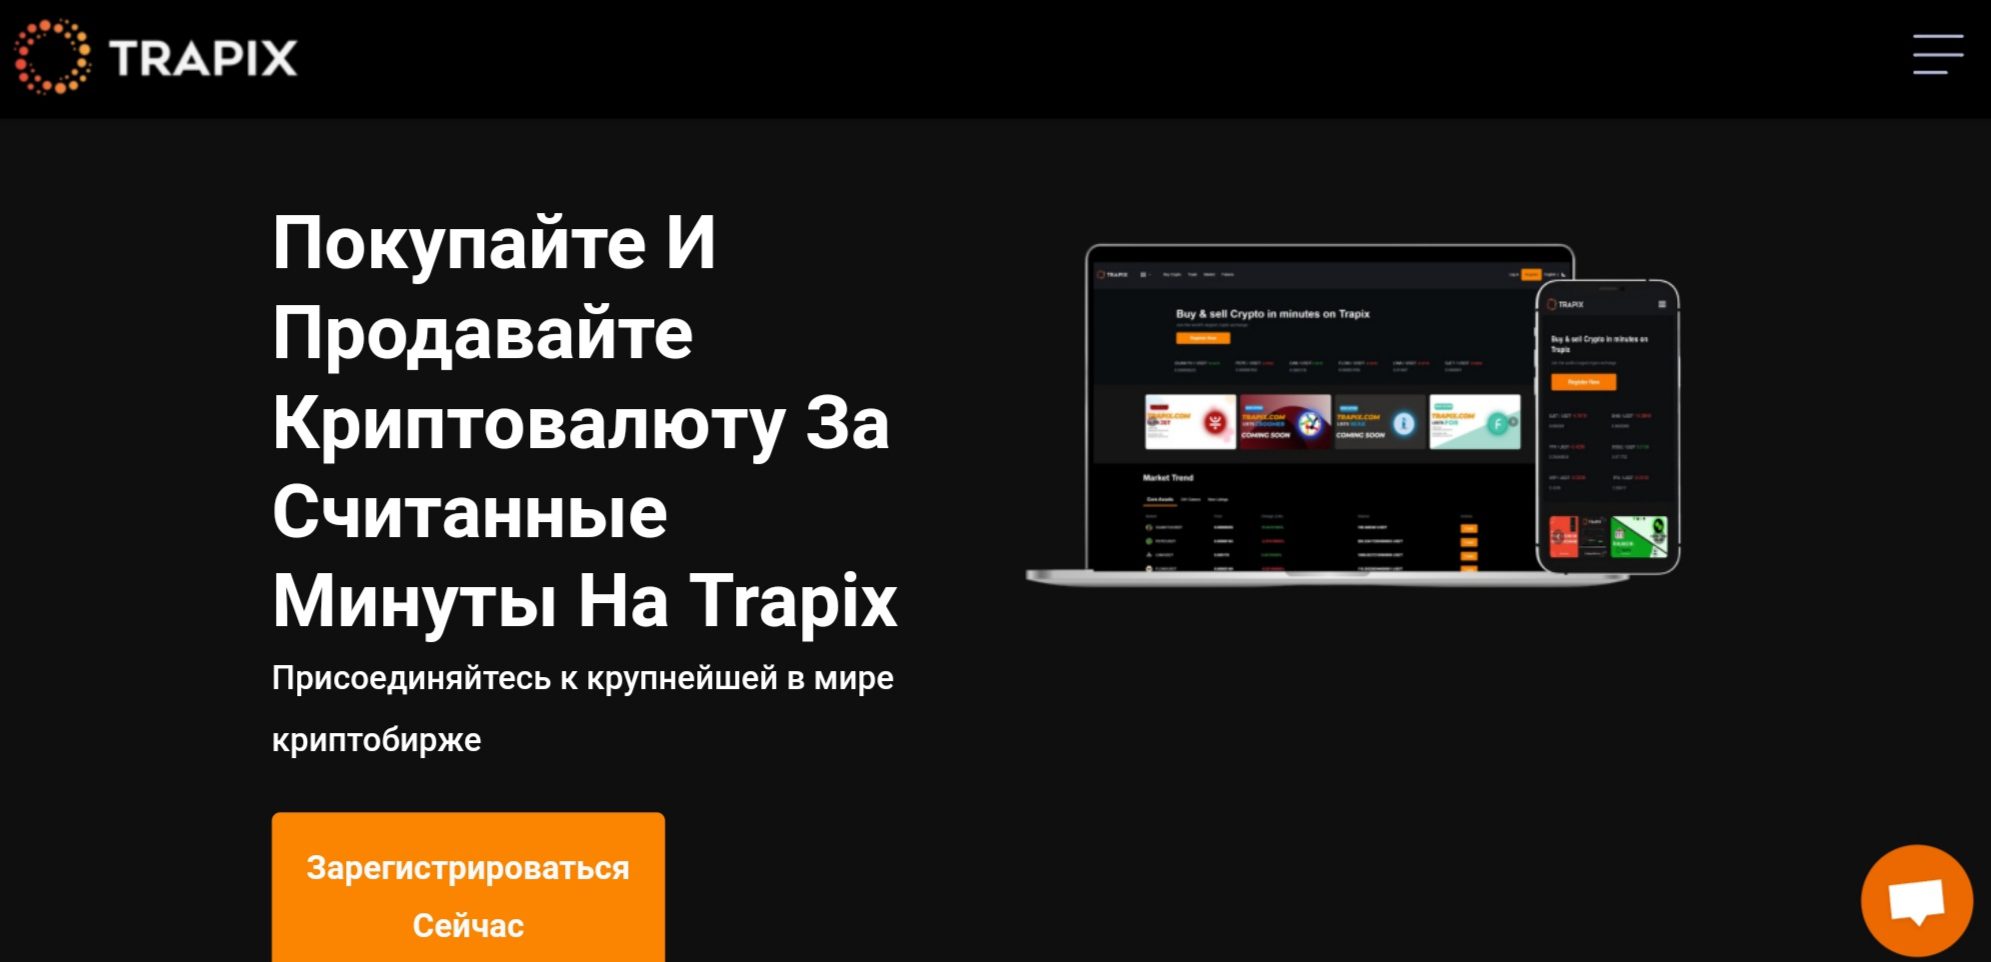 Trapix сайт